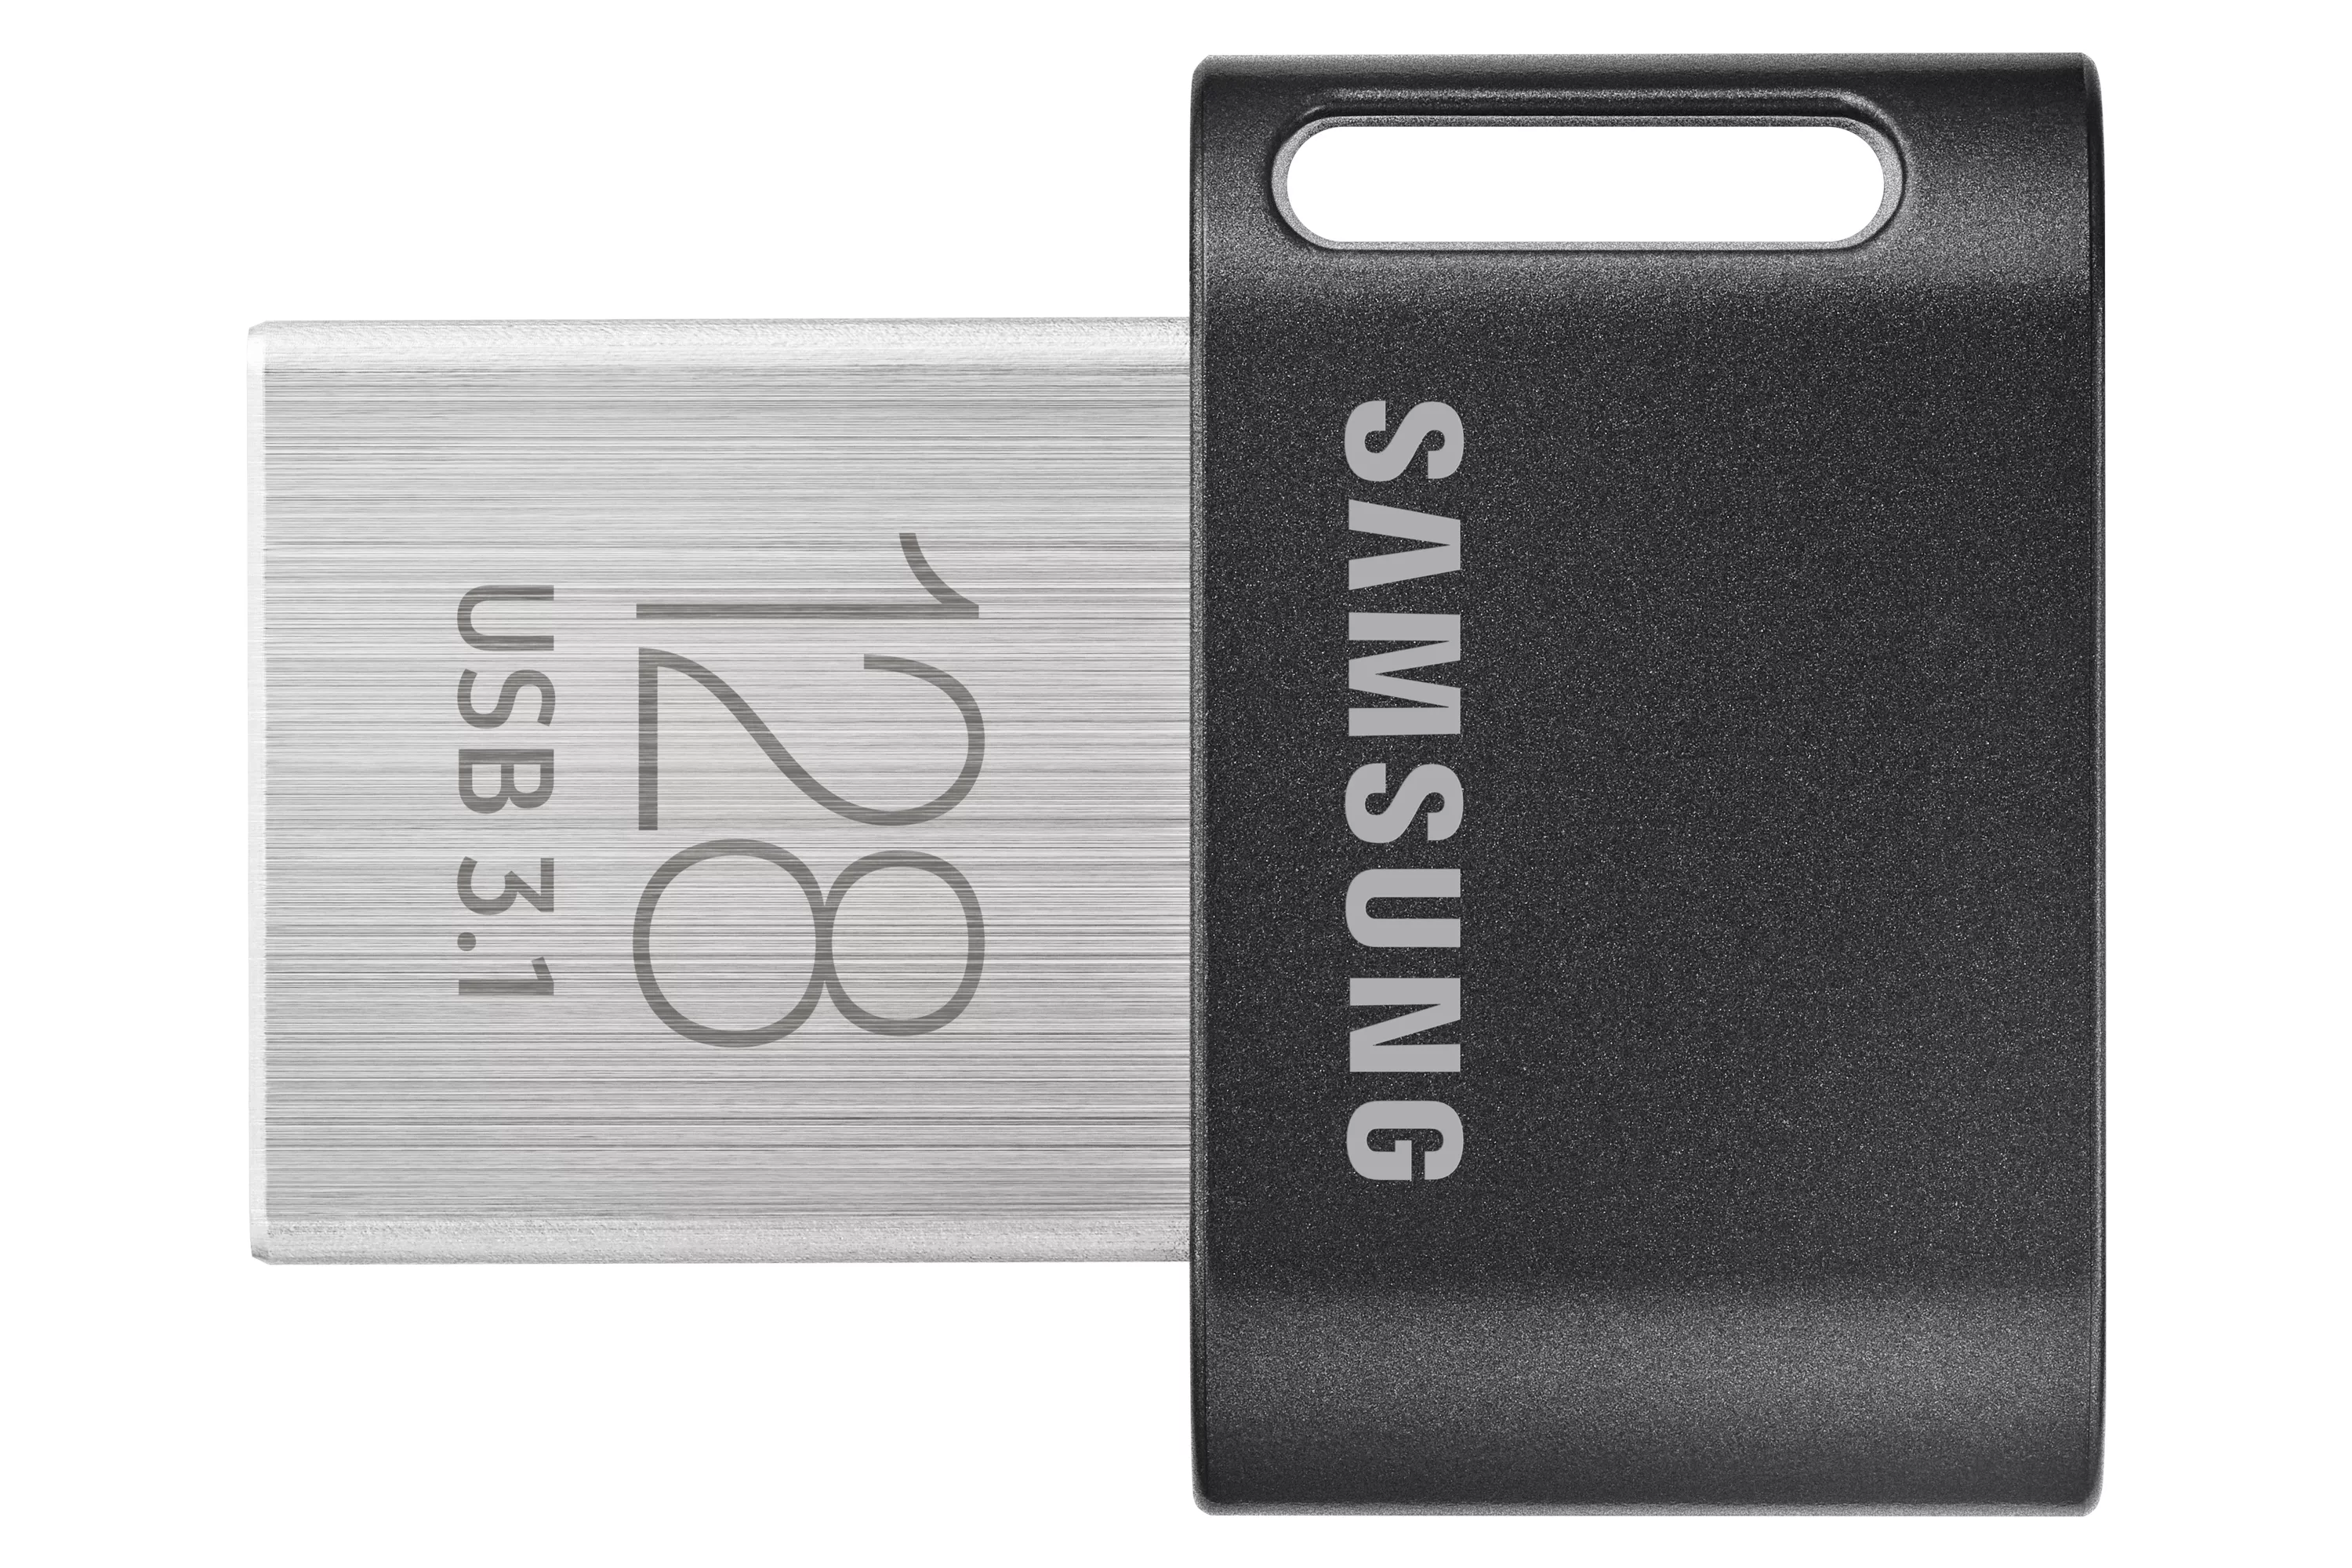 Achat SAMSUNG FIT PLUS 128Go USB 3.1 - 8801643233556